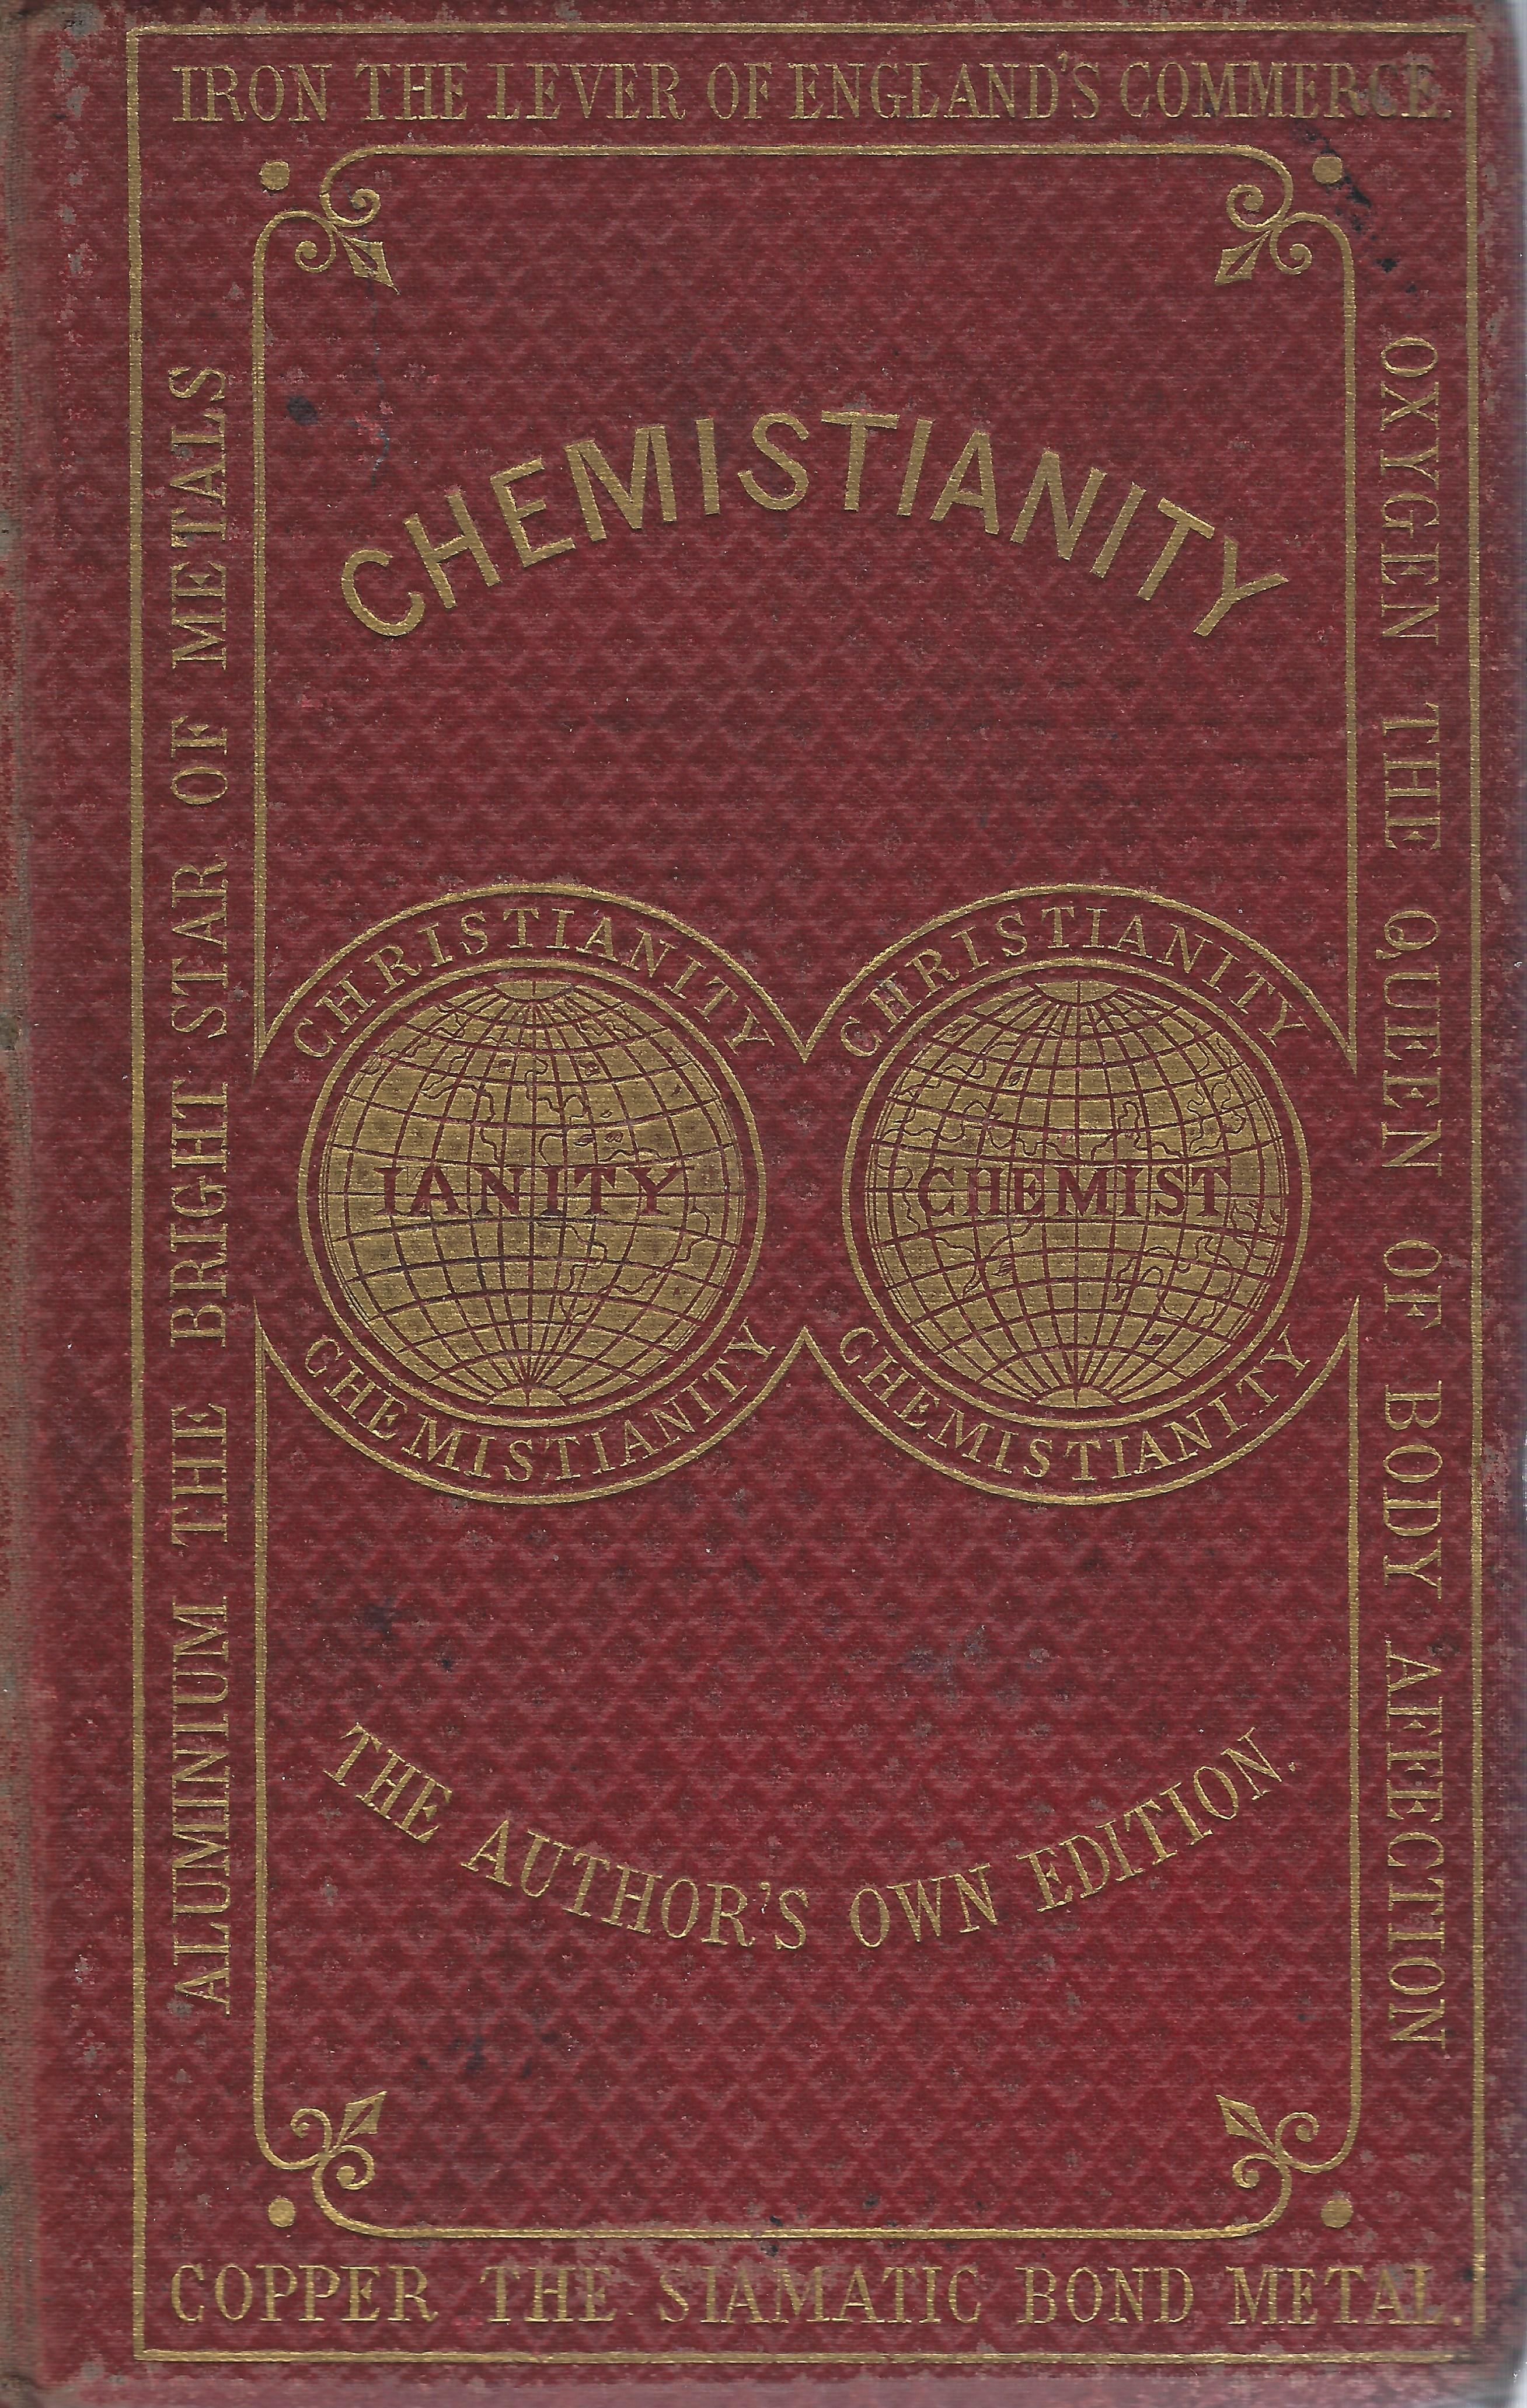 Chemistianity